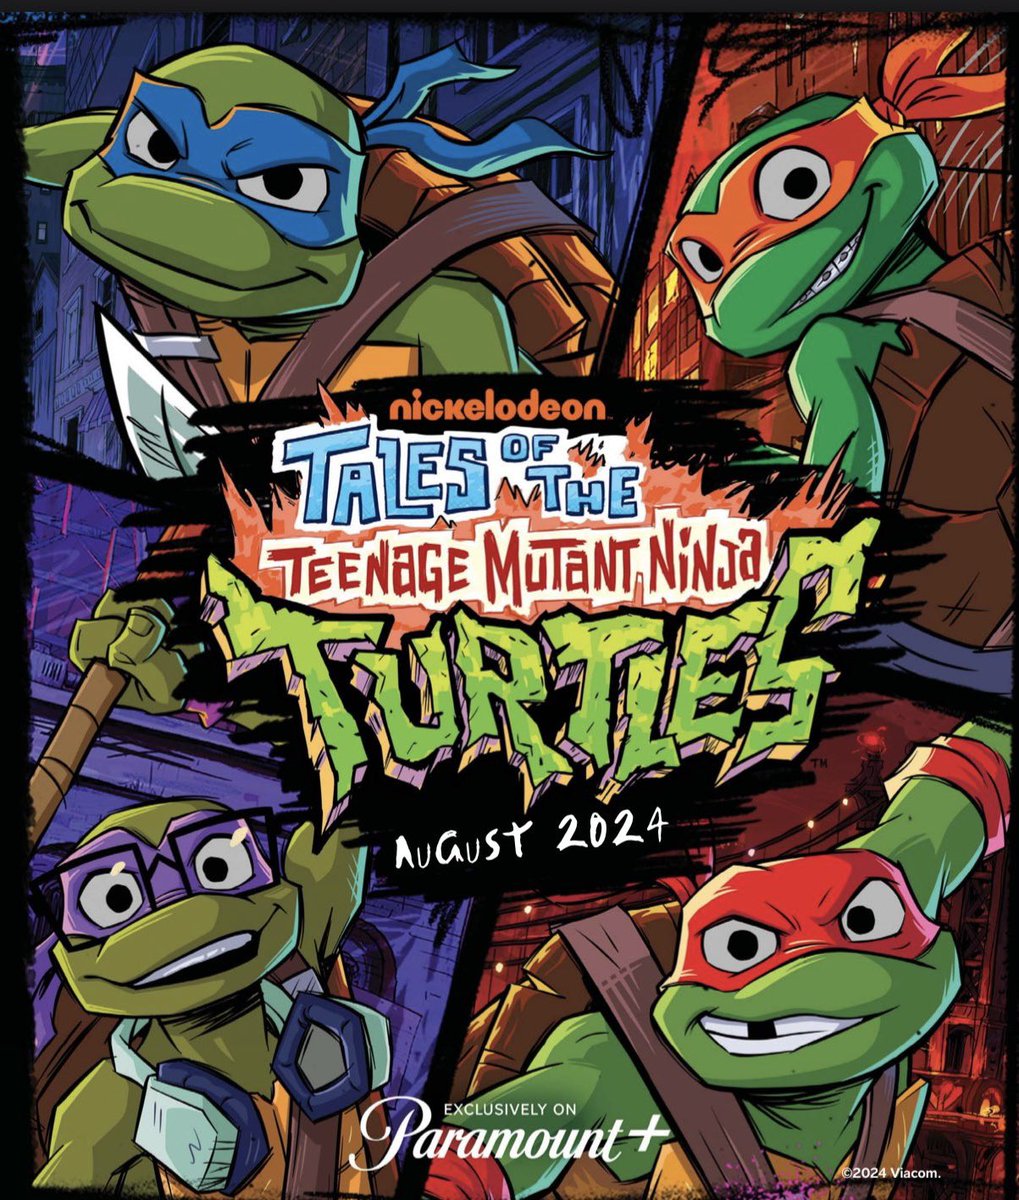 Tales of The Teenage Mutant Ninja Turtles (new tv series) release month revealed 📺 Coming August 2024 (via Licensing Global Magazine)